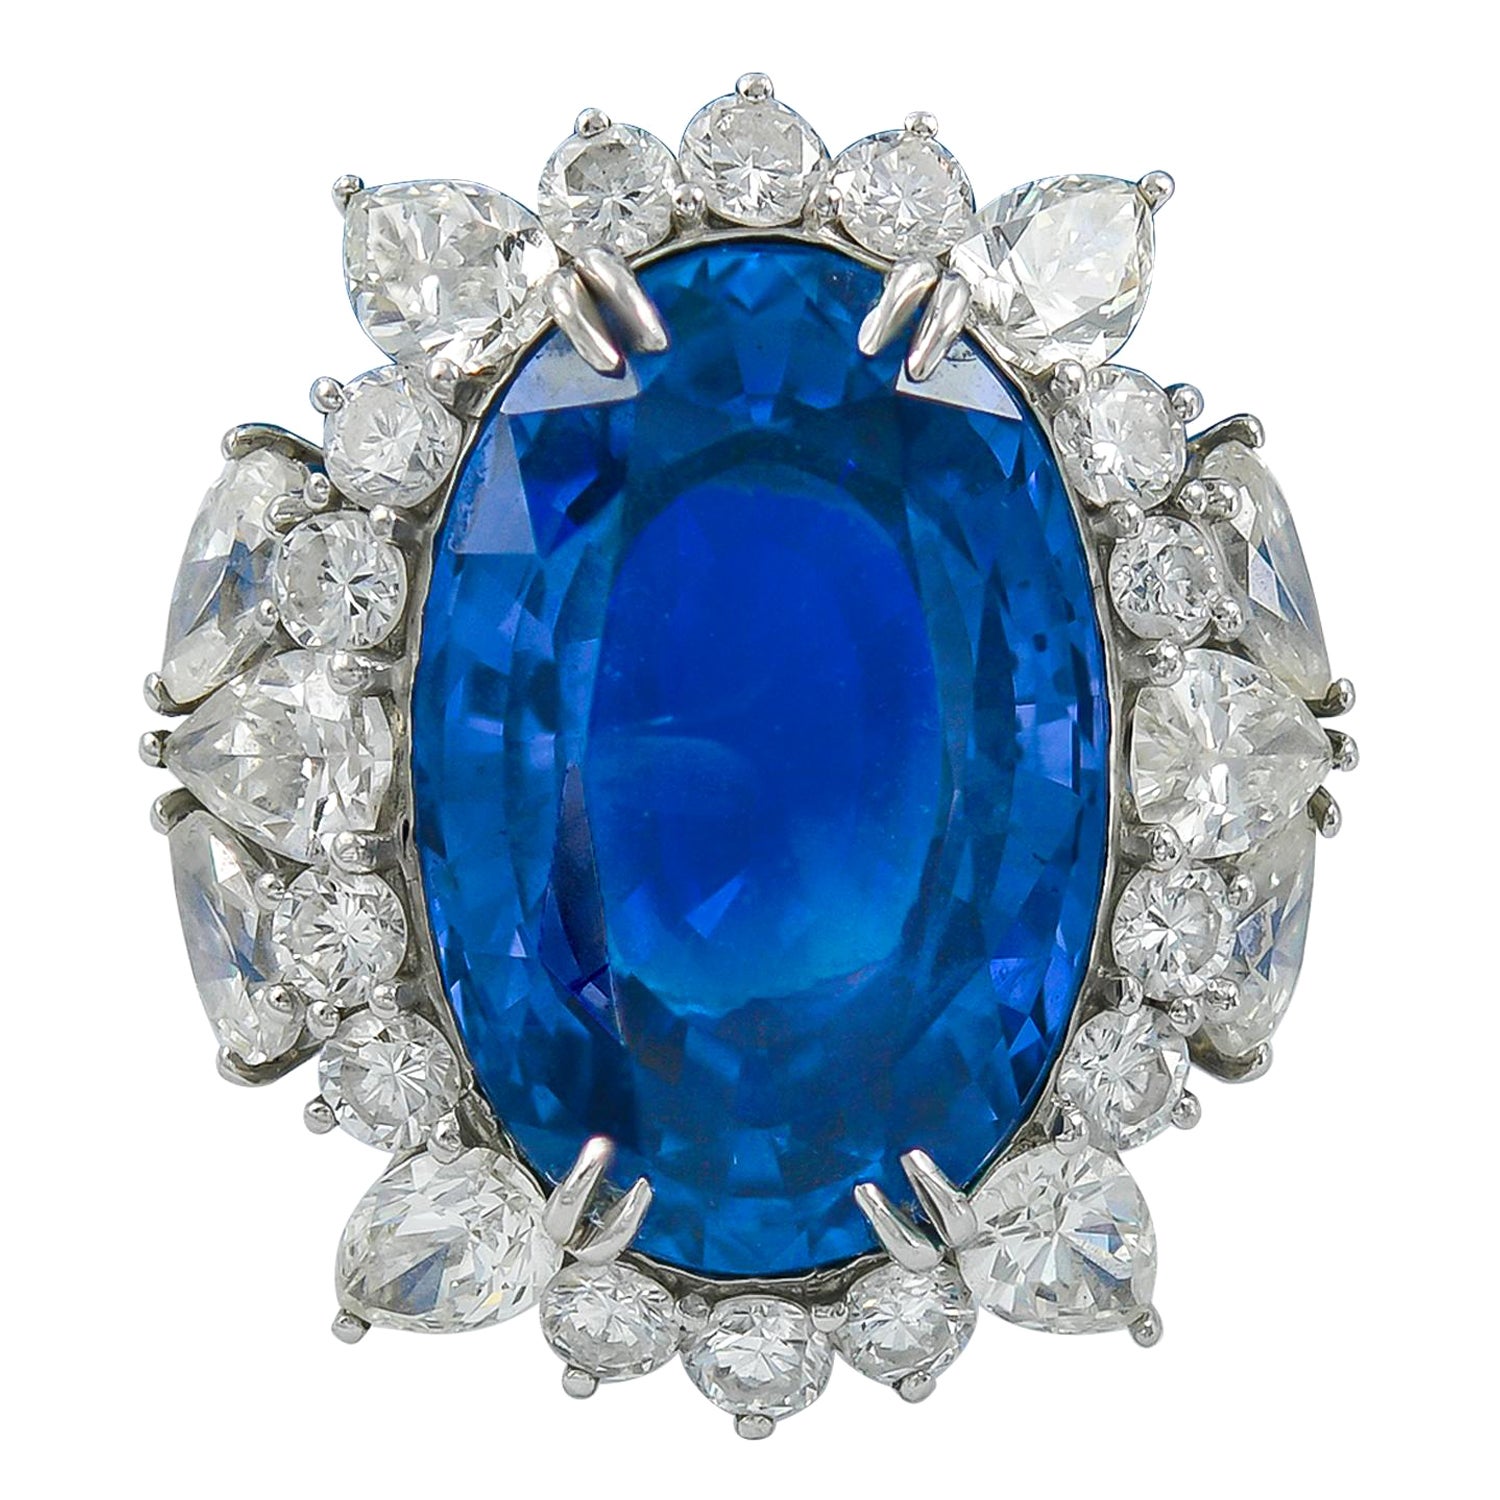 Spectra Fine Jewelry Certified 26.19 Carat Ceylon Sapphire Diamond Ring